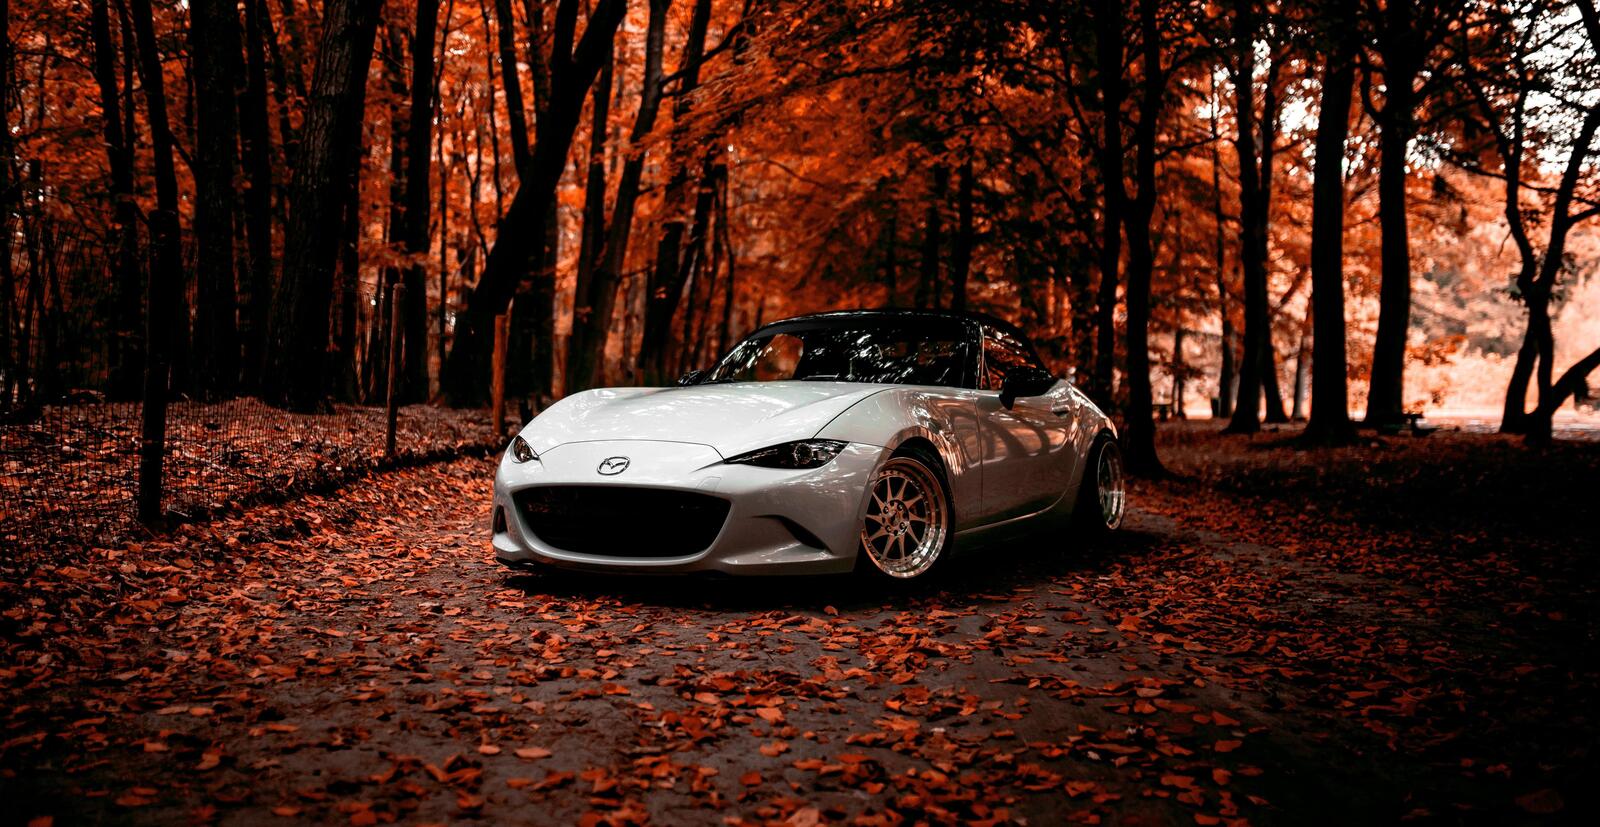 Wallpapers Mazda MX5 autumn Park on the desktop